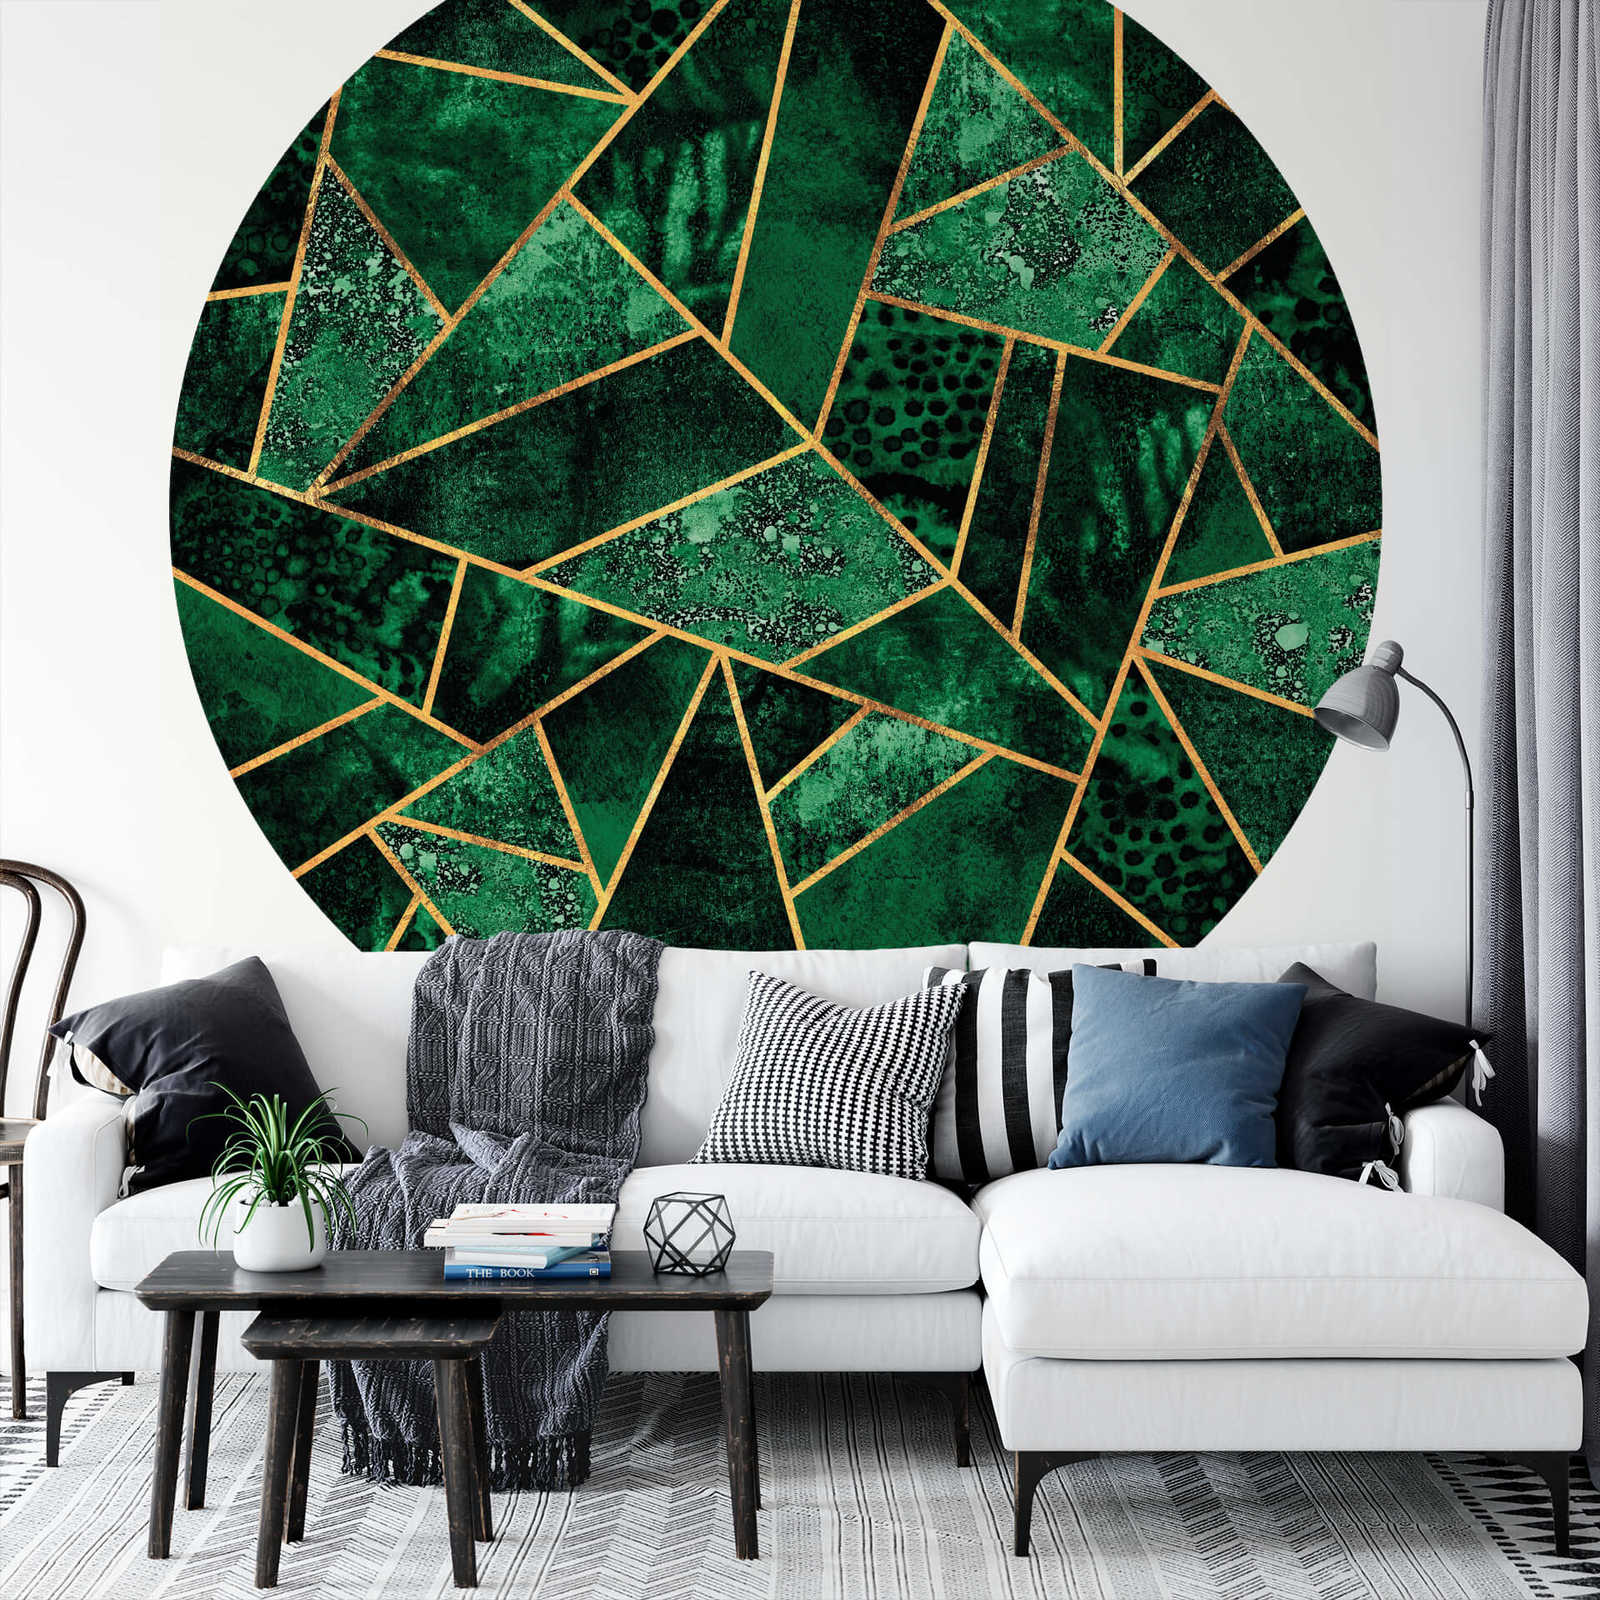             Mural de pared de formas geométricas redondas, verde
        